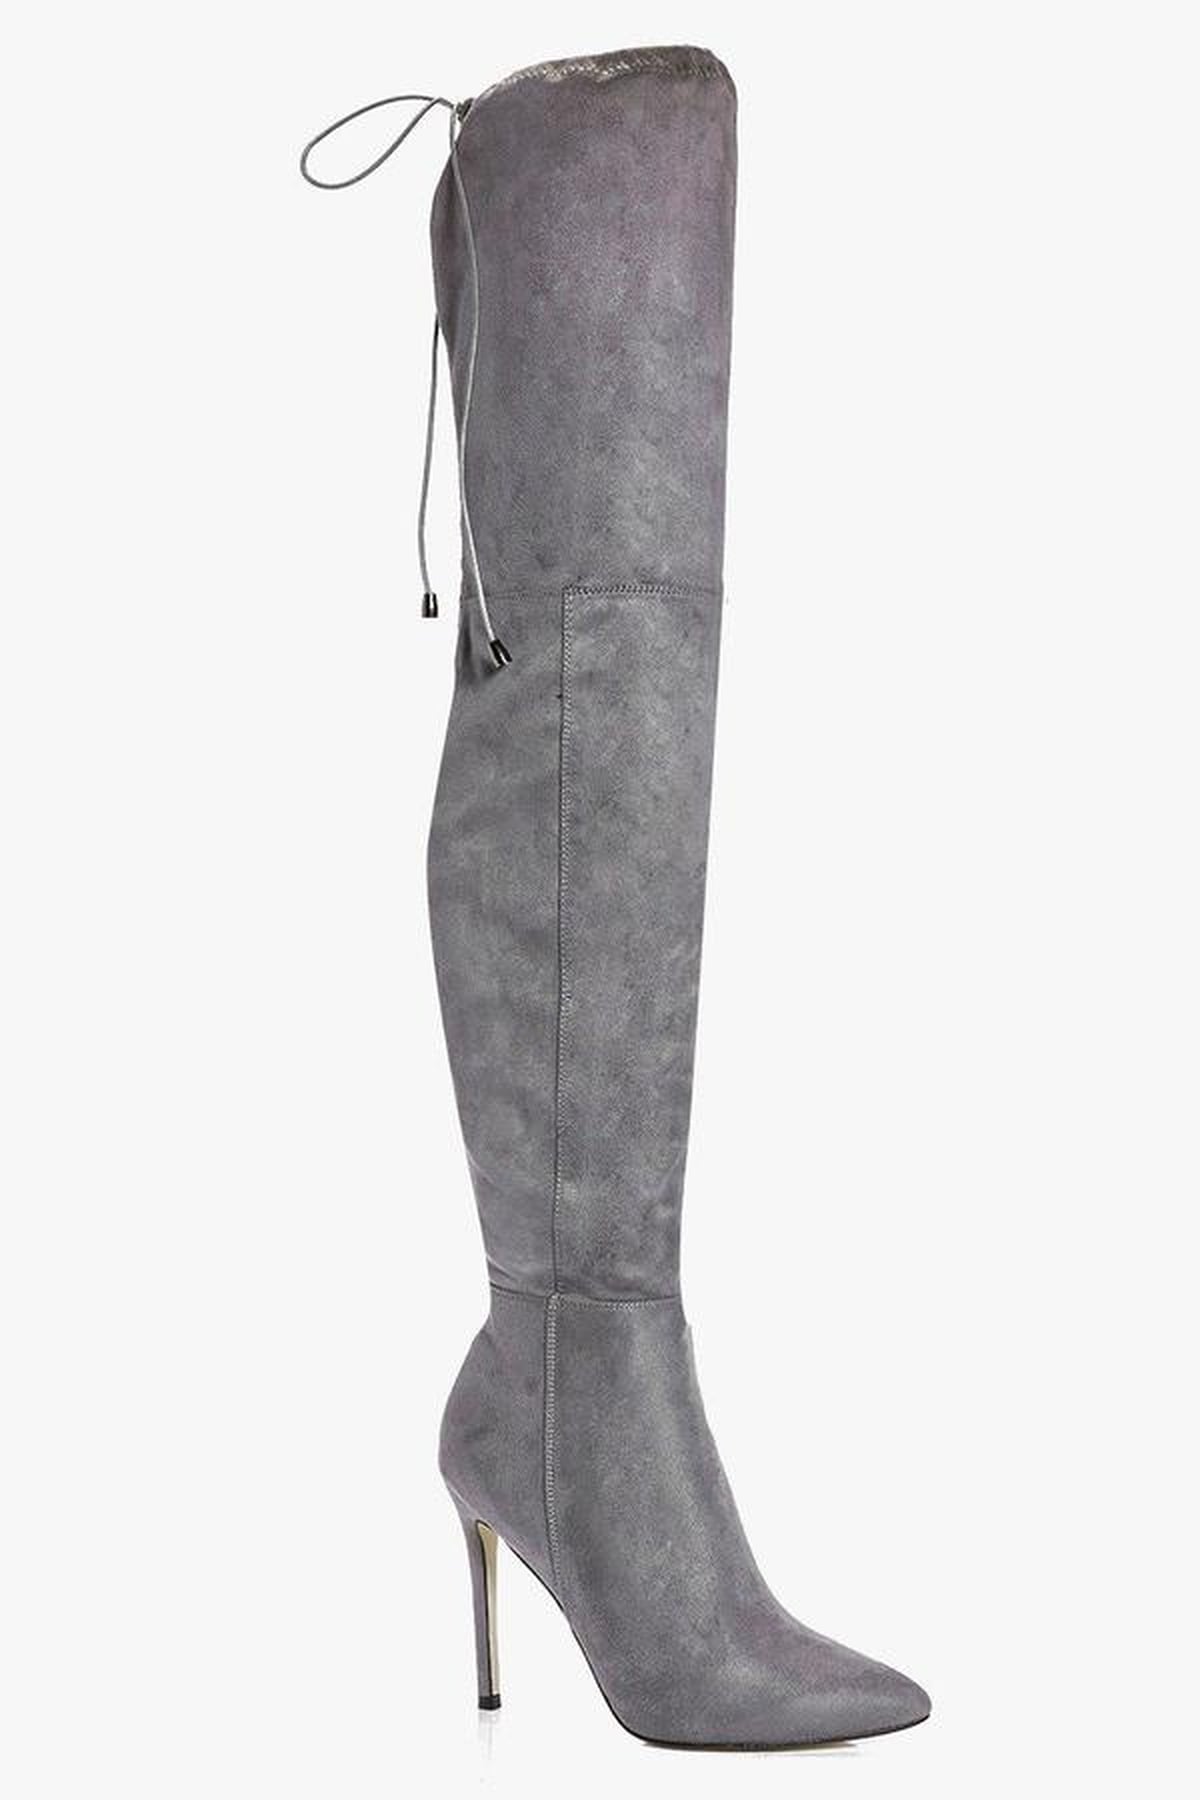 Chrissy Teigen Plaid Off-White Boots | POPSUGAR Fashion